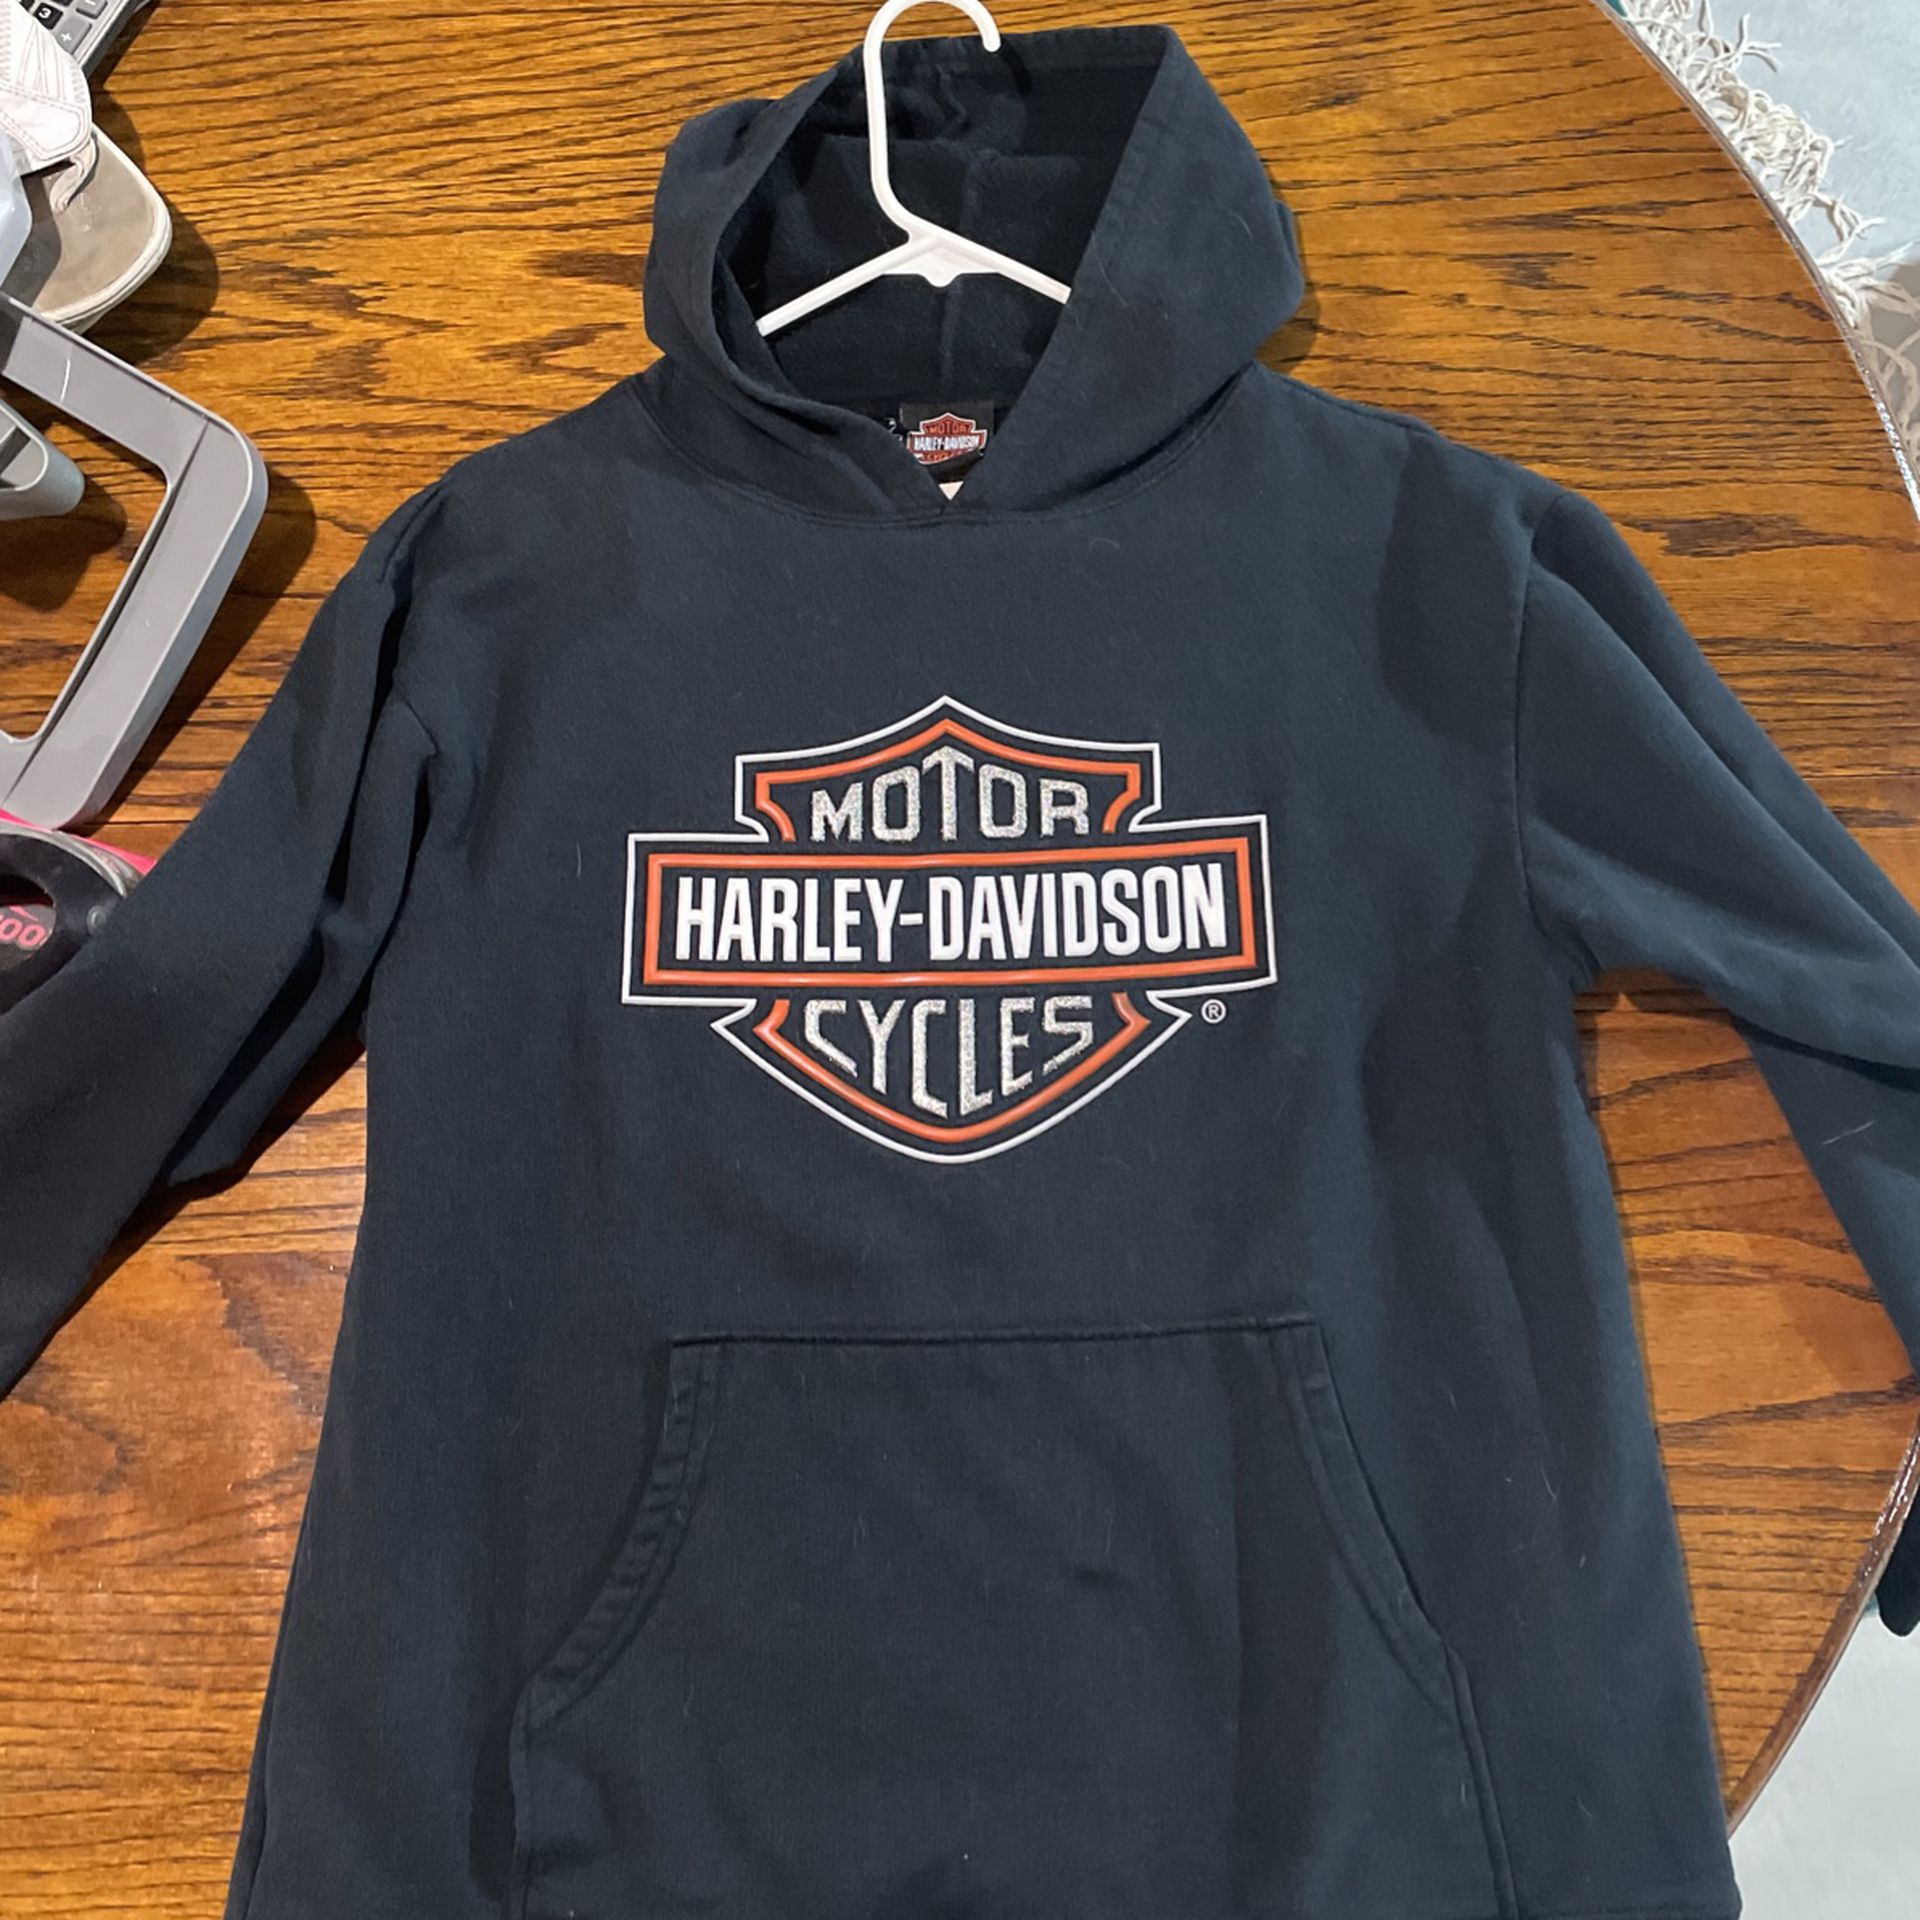 Harley Davidson sweatshirt.